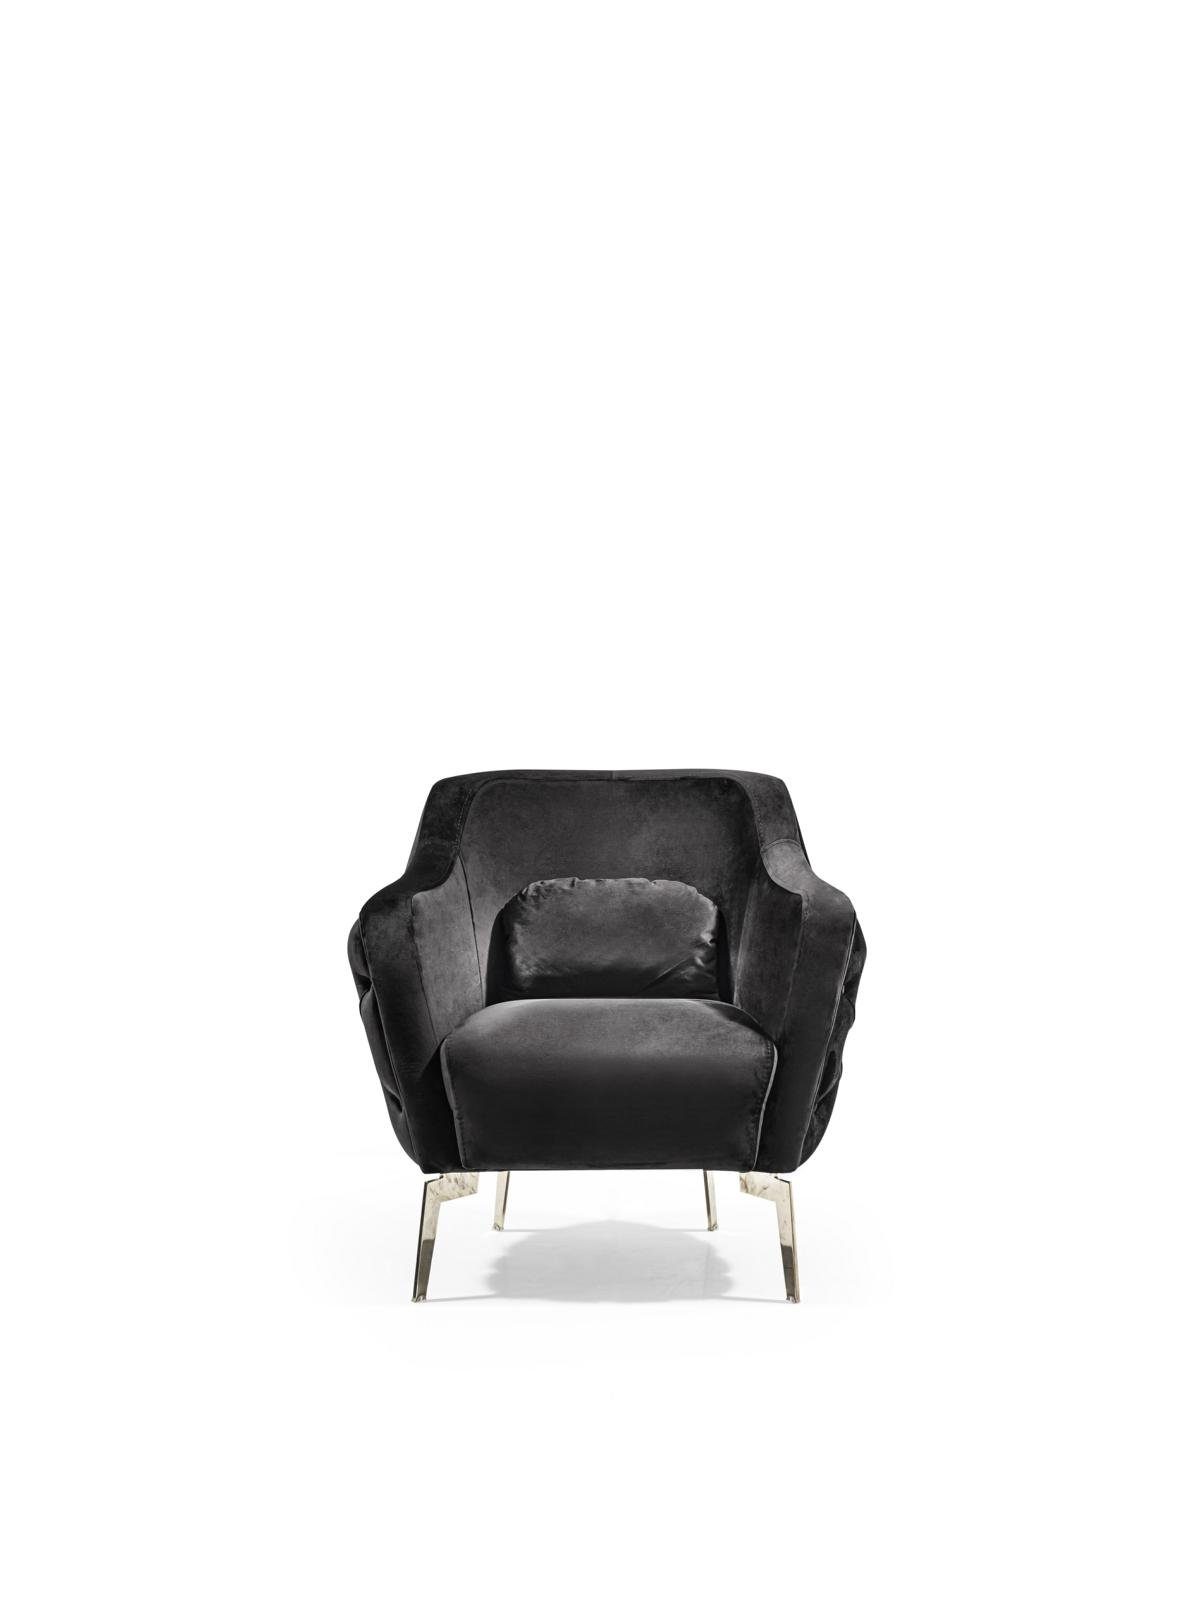 JVmoebel Farbe, Sofa Möbel neu Sessel weiße Sofa Sitzer Luxus Design Teile Sofagarnitur 31 2